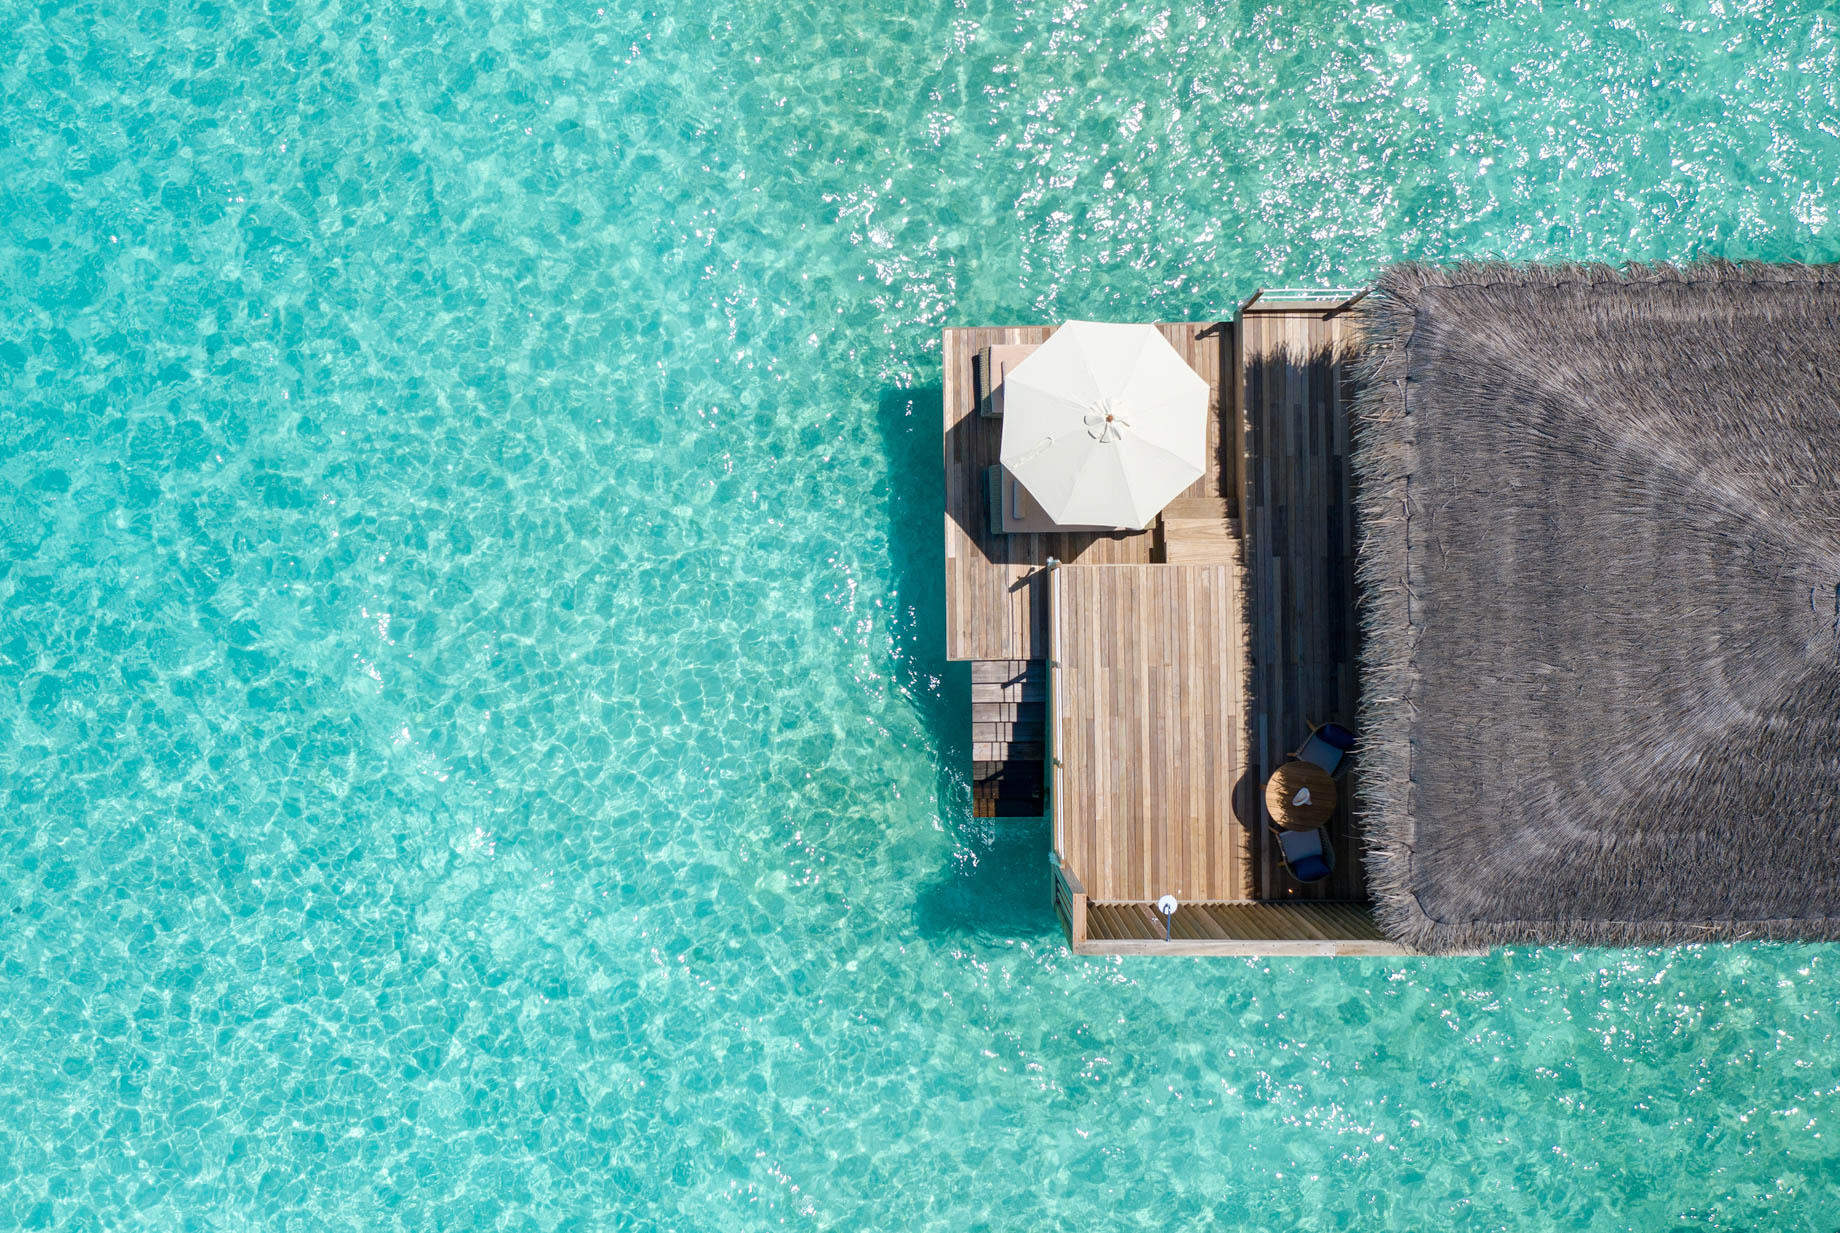 Baglioni Resort Maldives – Maagau Island, Rinbudhoo, Maldives – Water Villa Overhead Aerial View